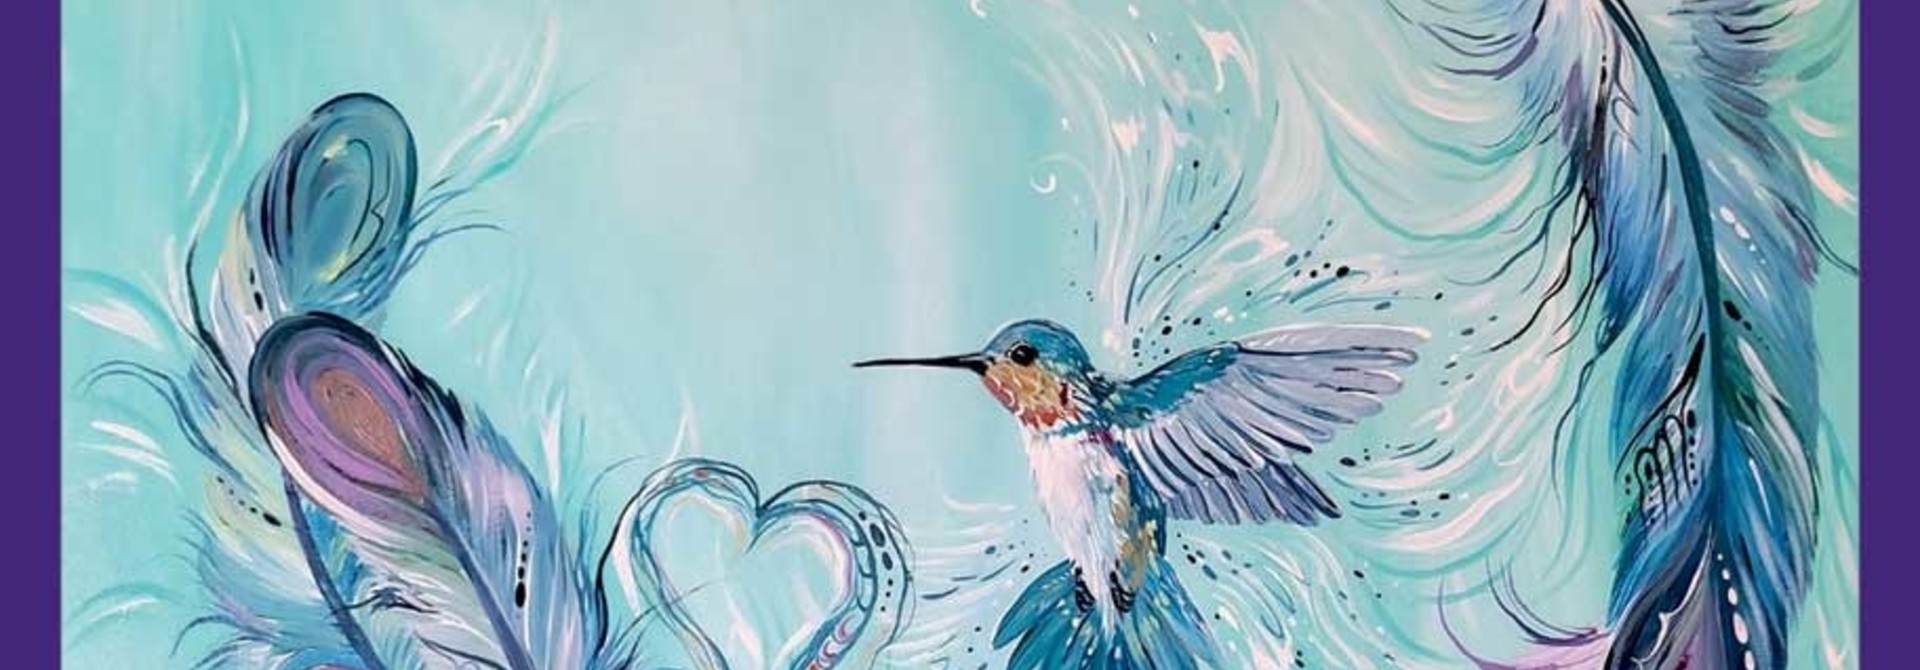 72 Piece Puzzle - Hummingbird Feathers by Carla Joseph